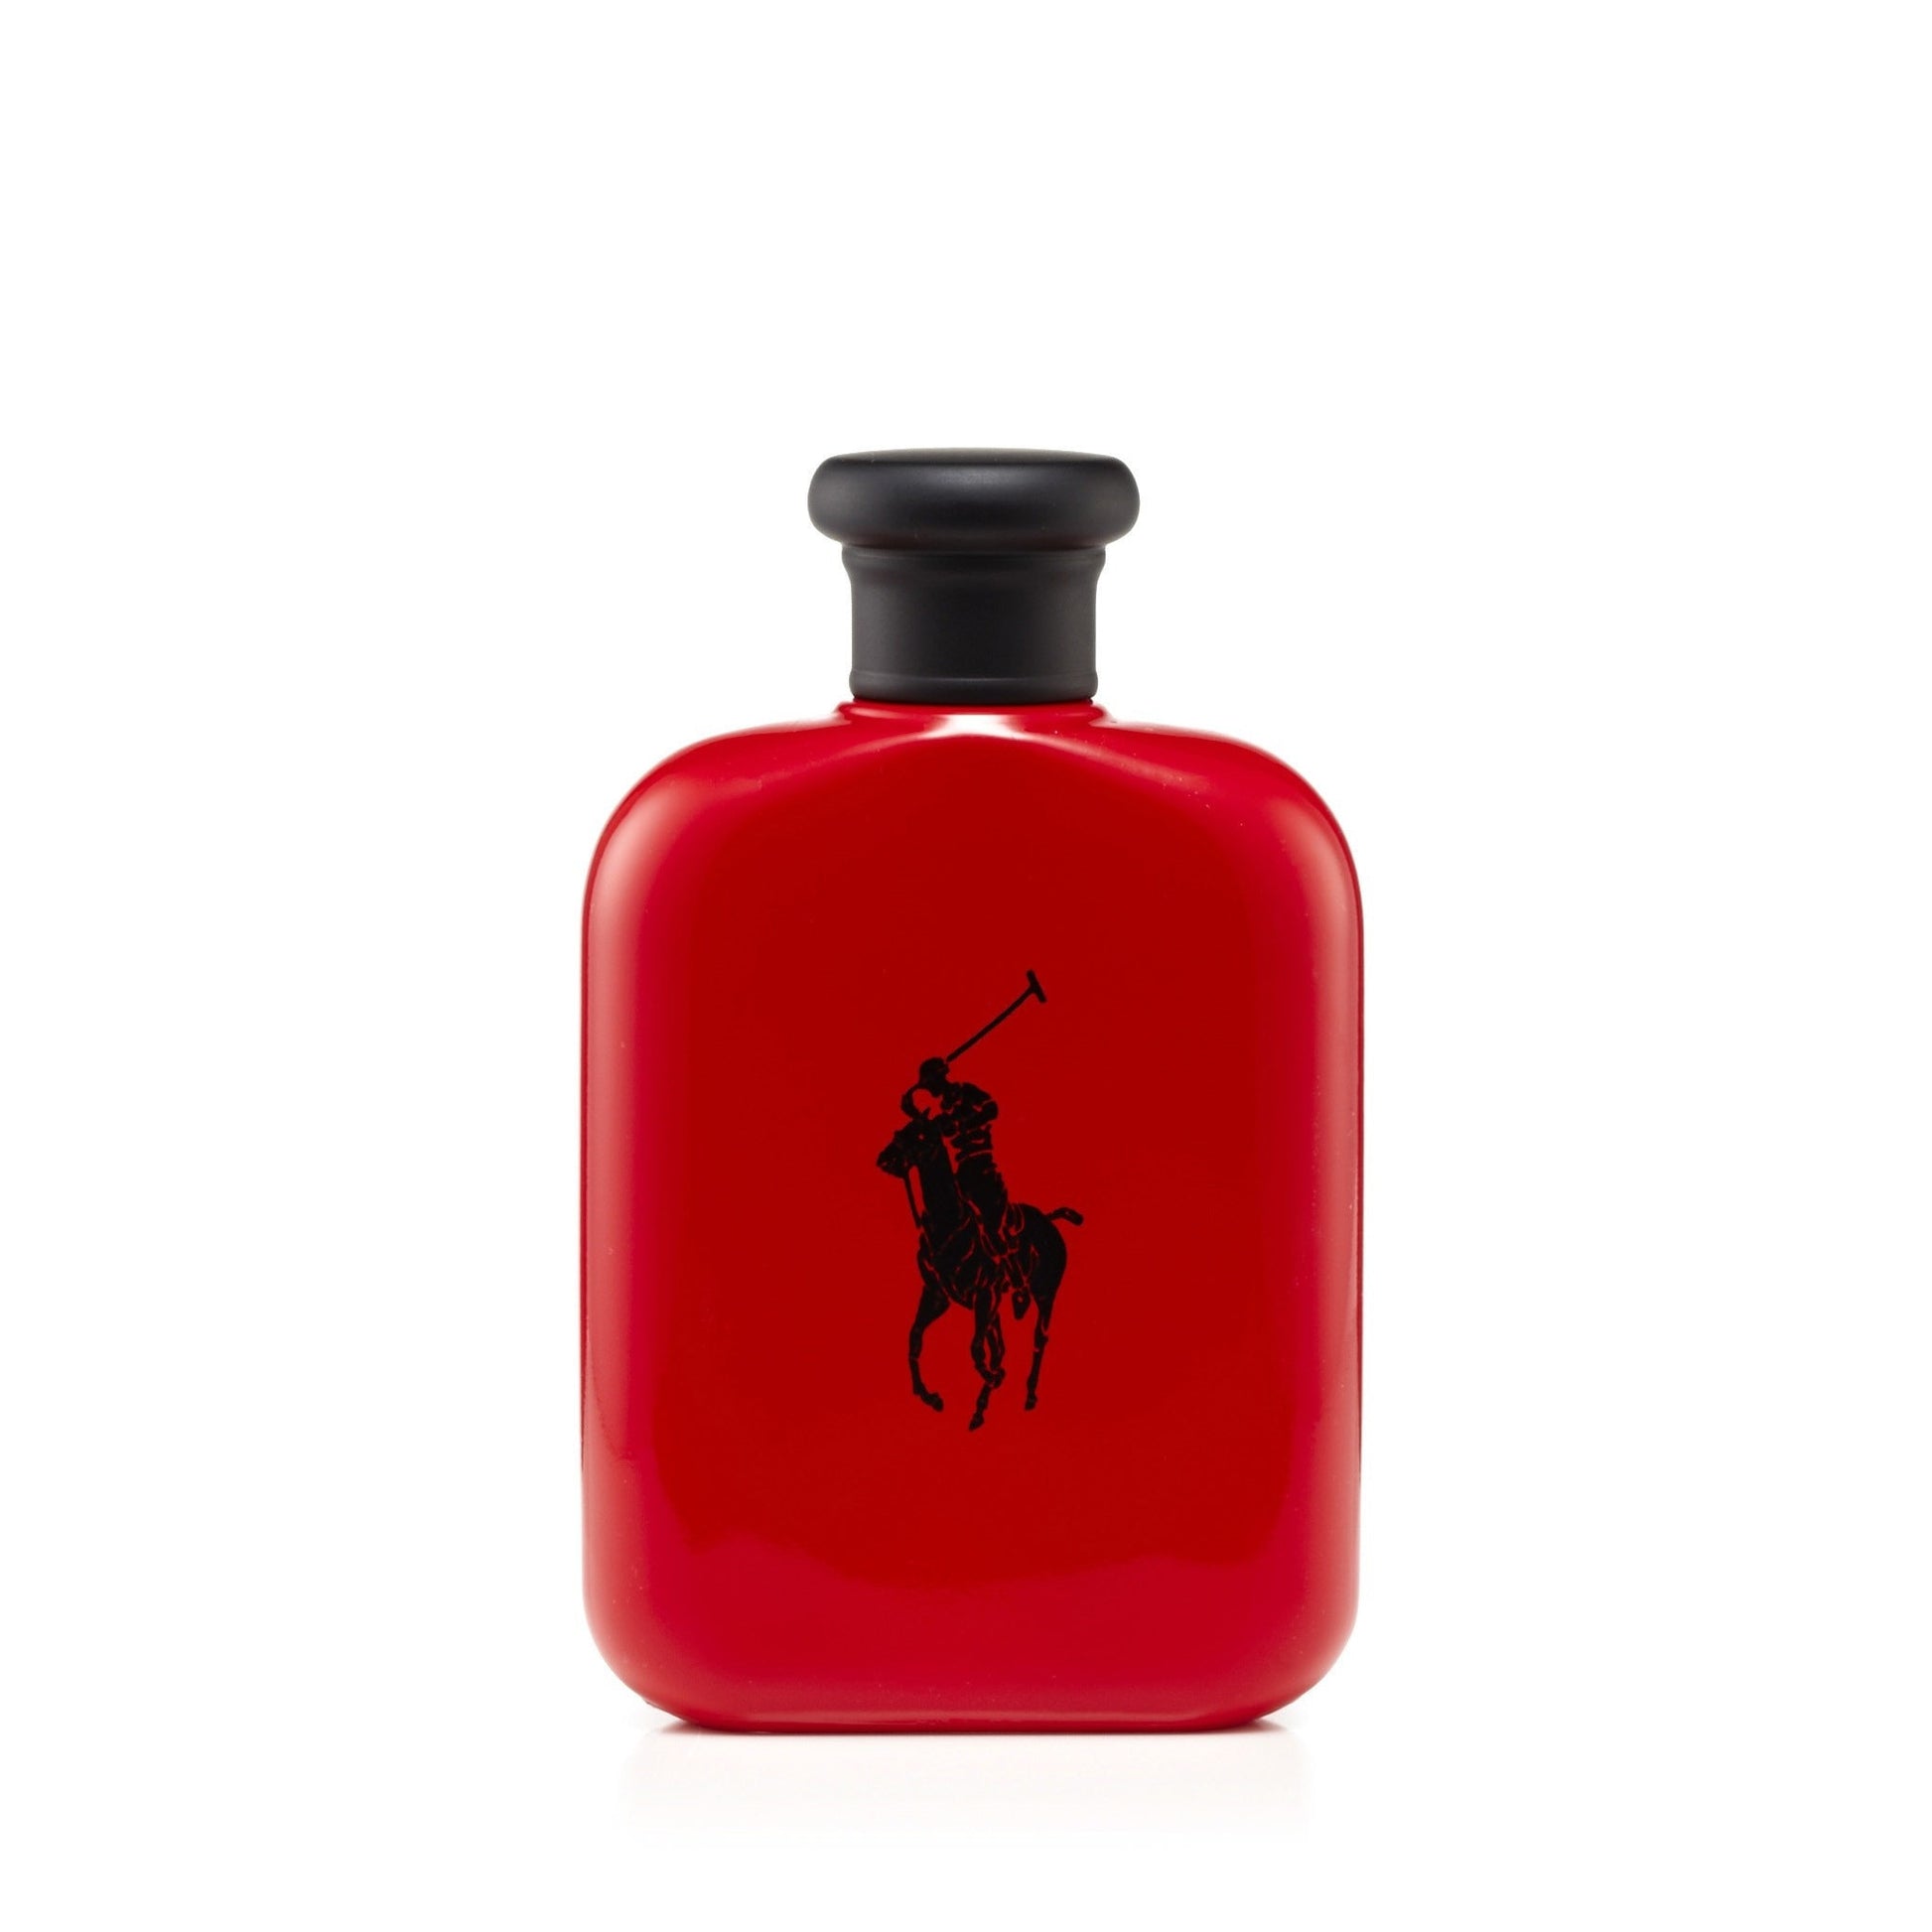 Ralph Lauren Polo Red Eau de Toilette Mens Spray 4.2 oz.  Click to open in modal